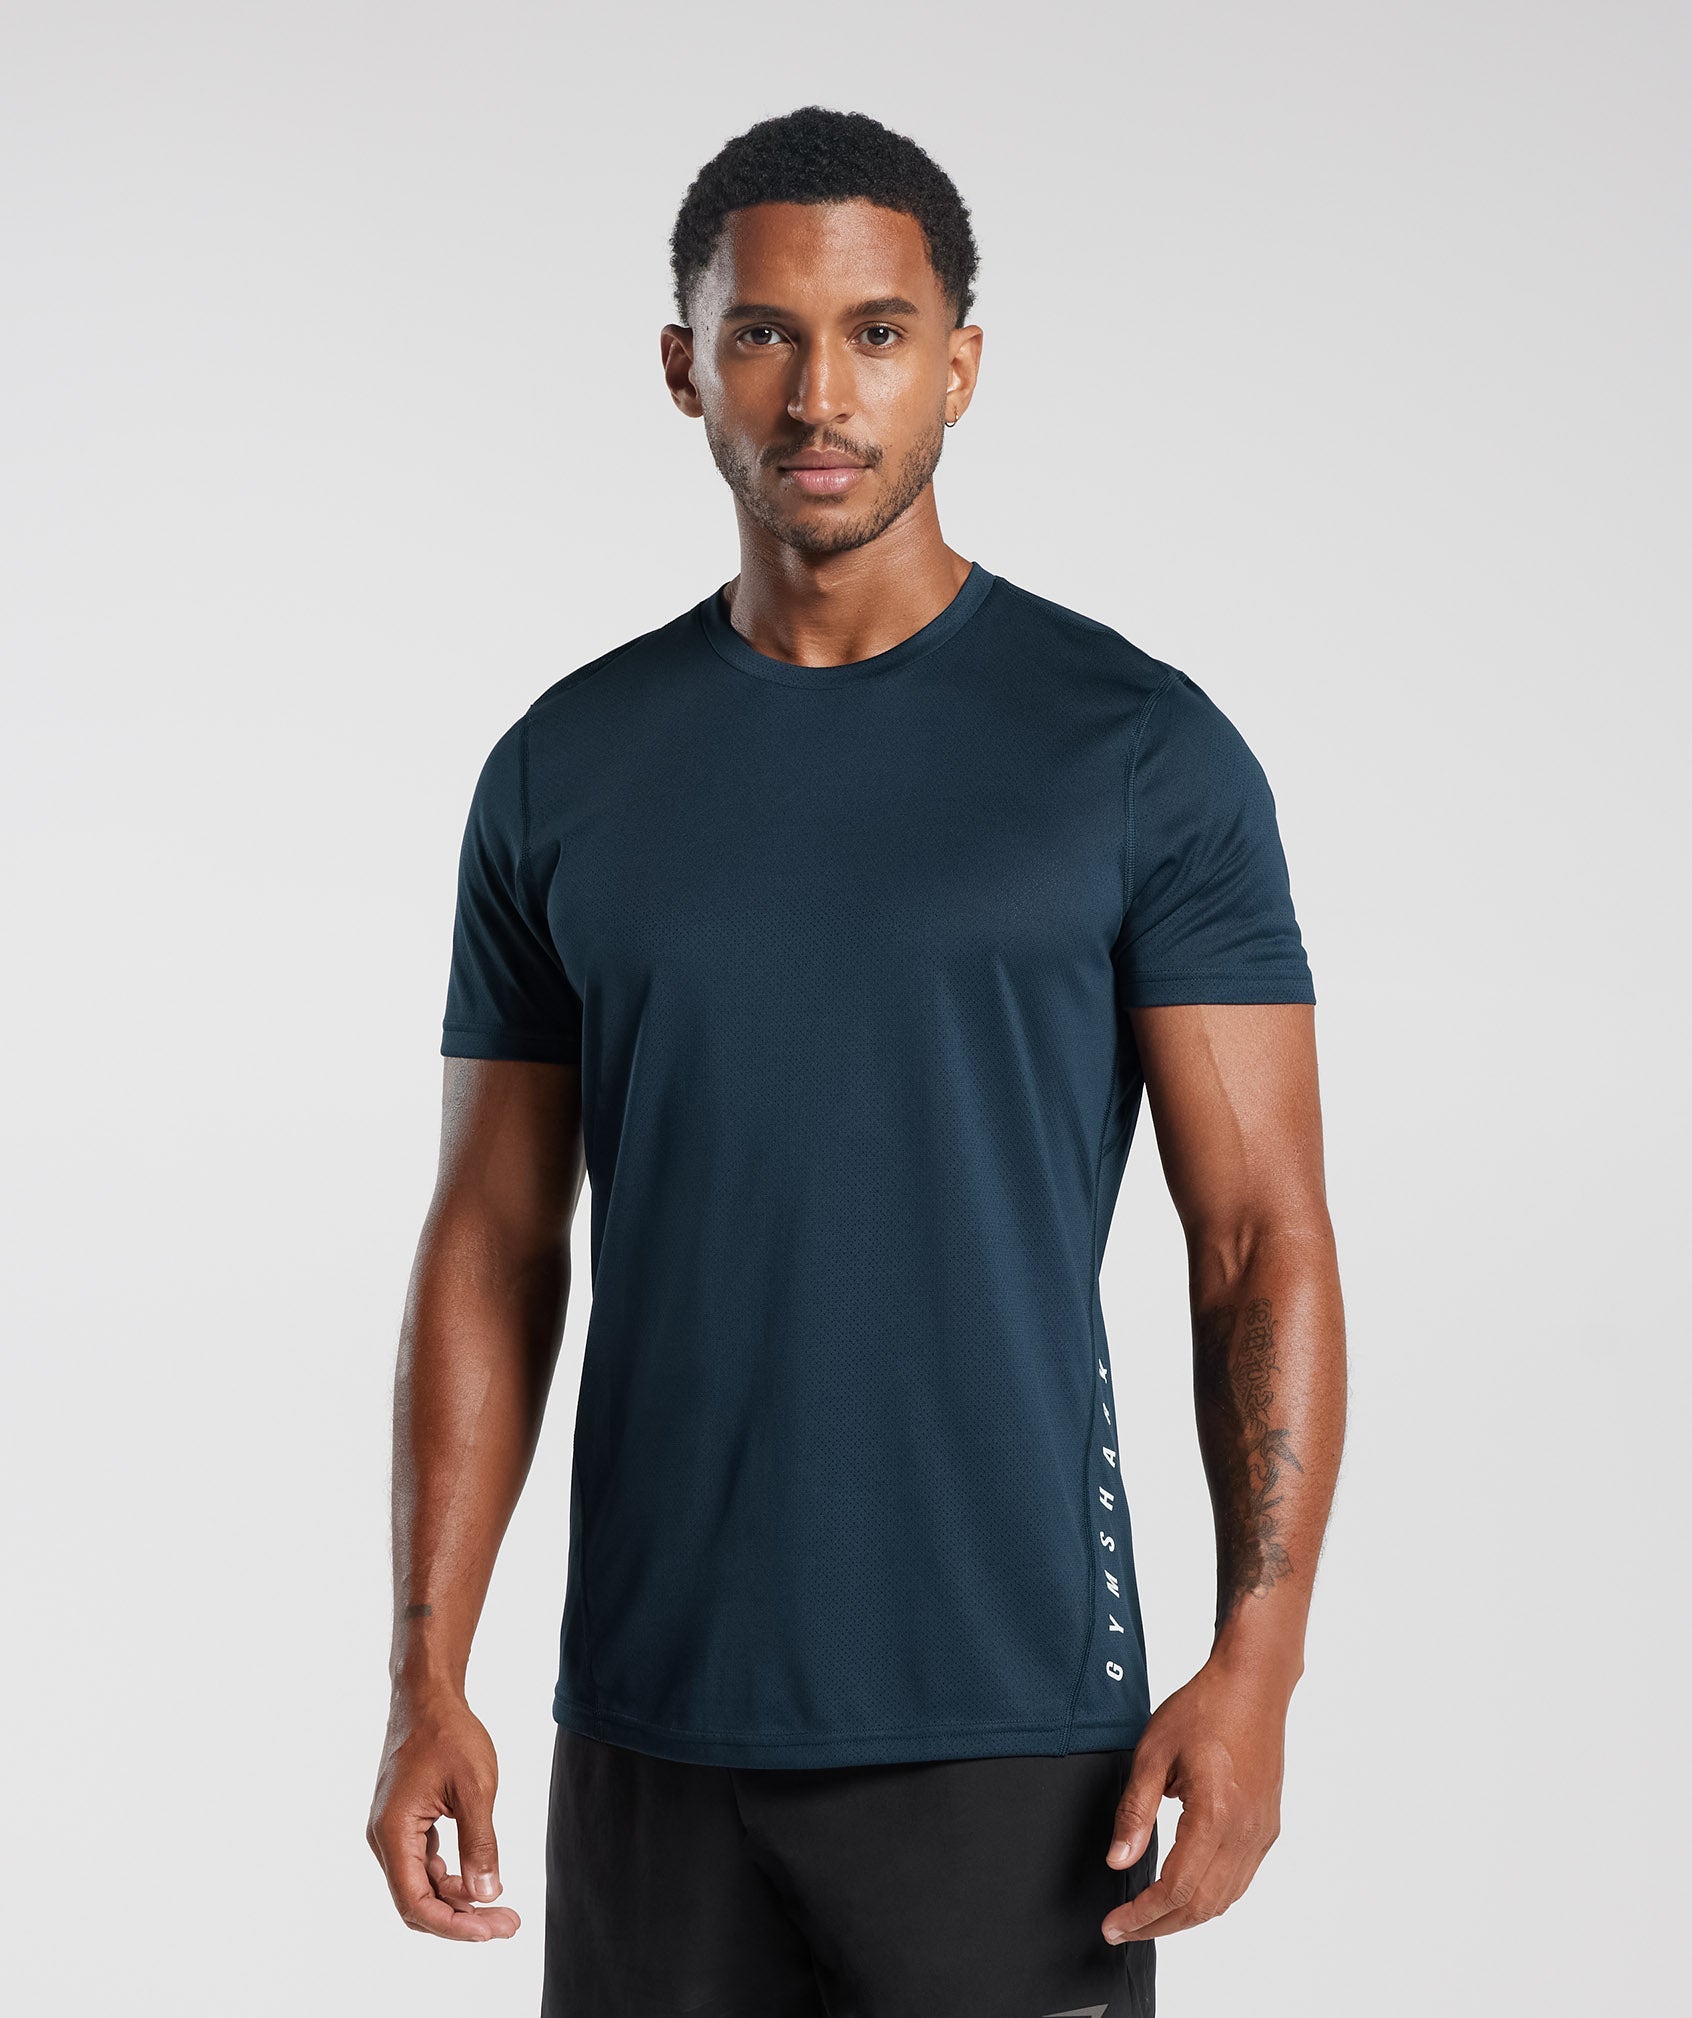 Gymshark Sport T-Shirt - Navy/Black Marl